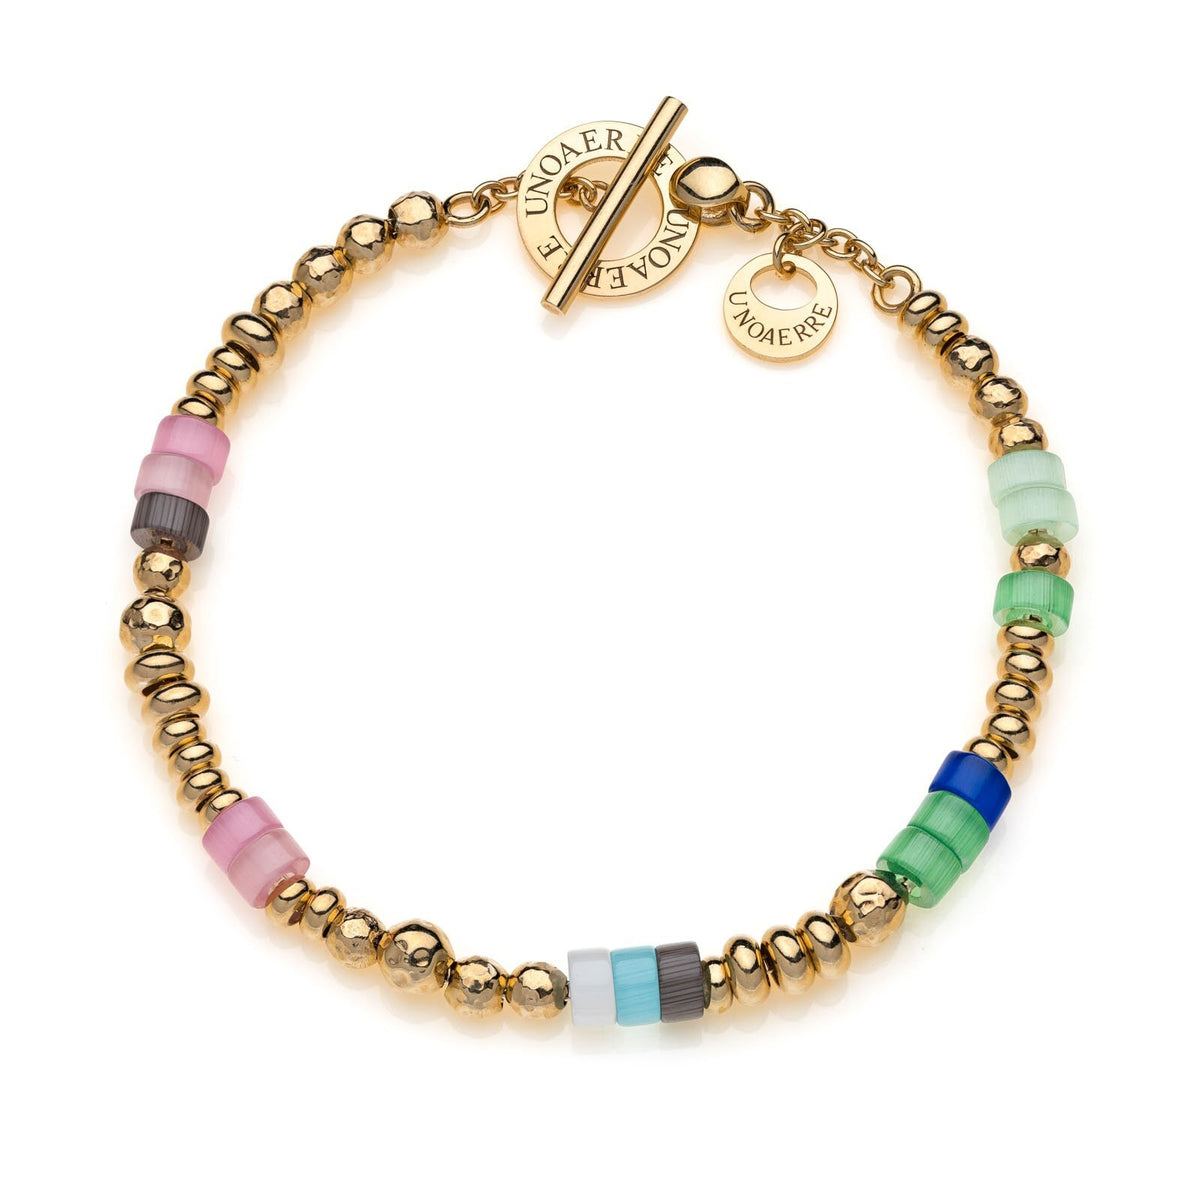 Golden silver bracelet with colored stones Unoaerre 703YBV1695170 6027 